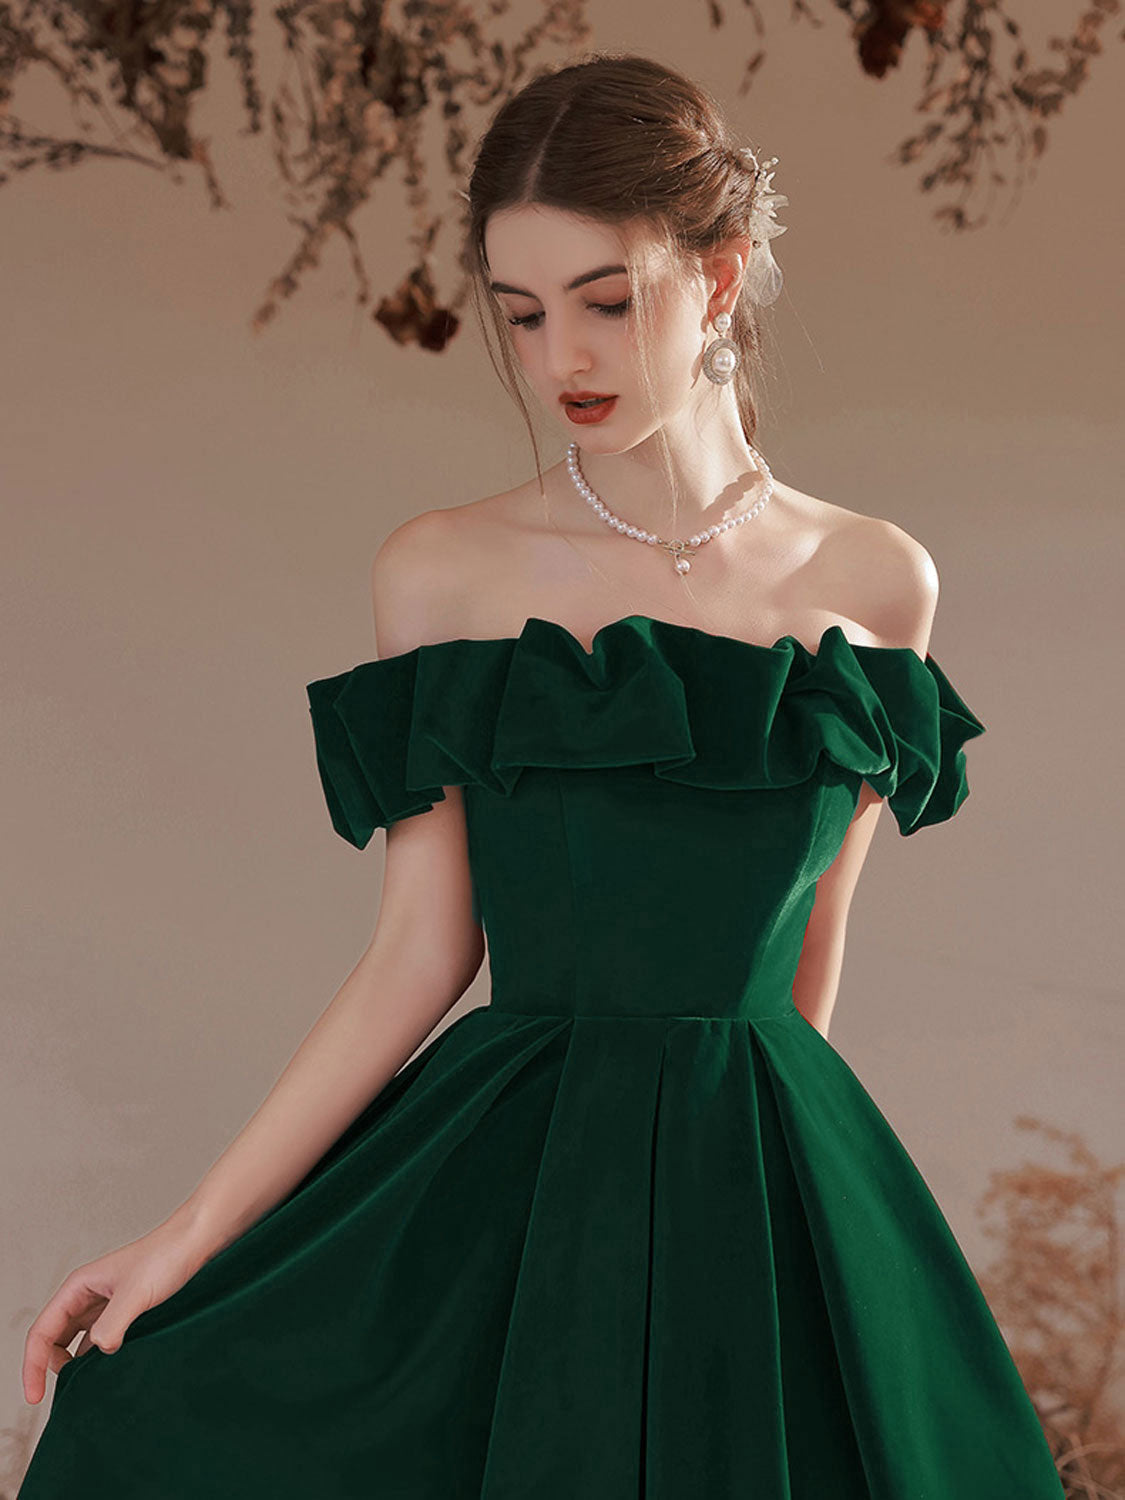 Emerald Green Maxi Dress - Satin Jacquard Dress - Cowl Neck Dress - Lulus